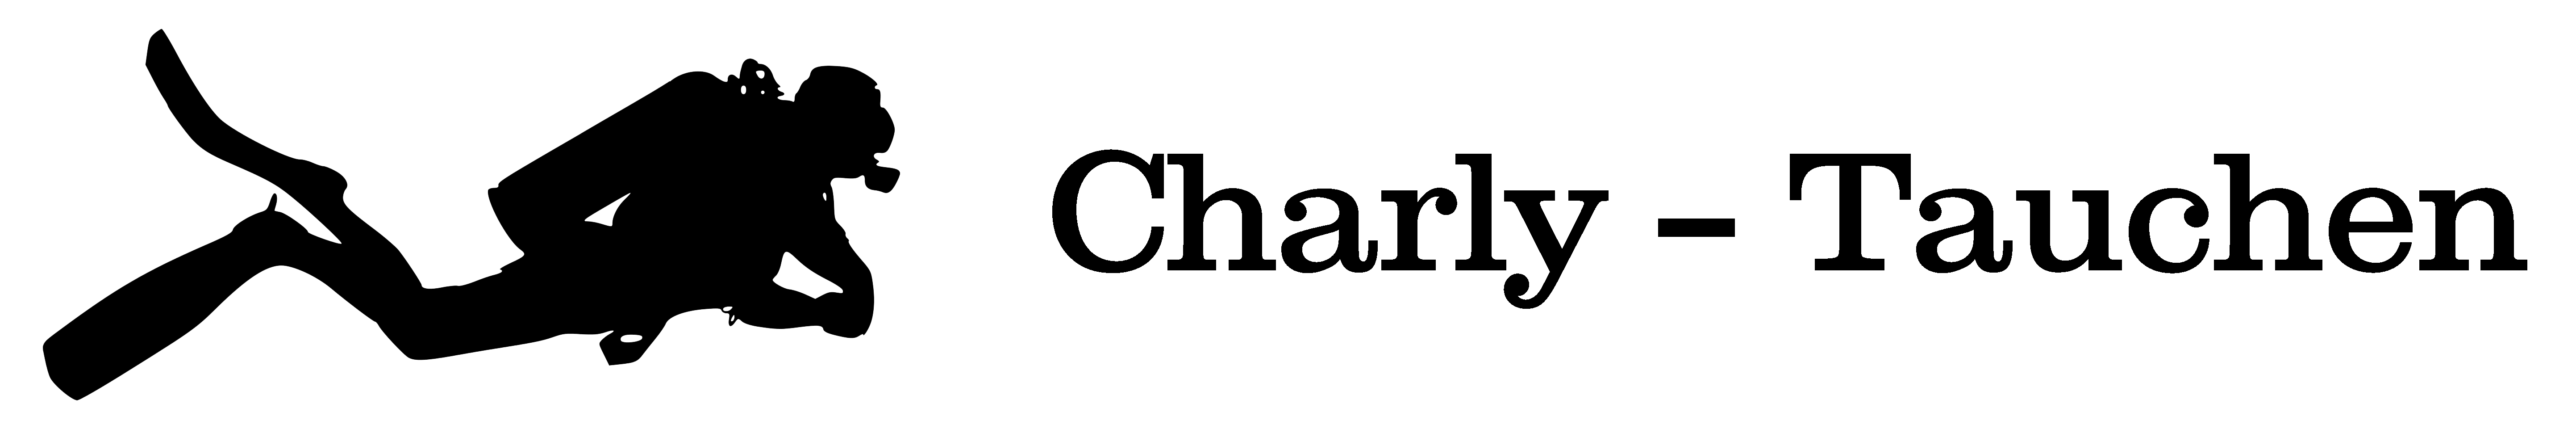 silhouette-3347237_logo